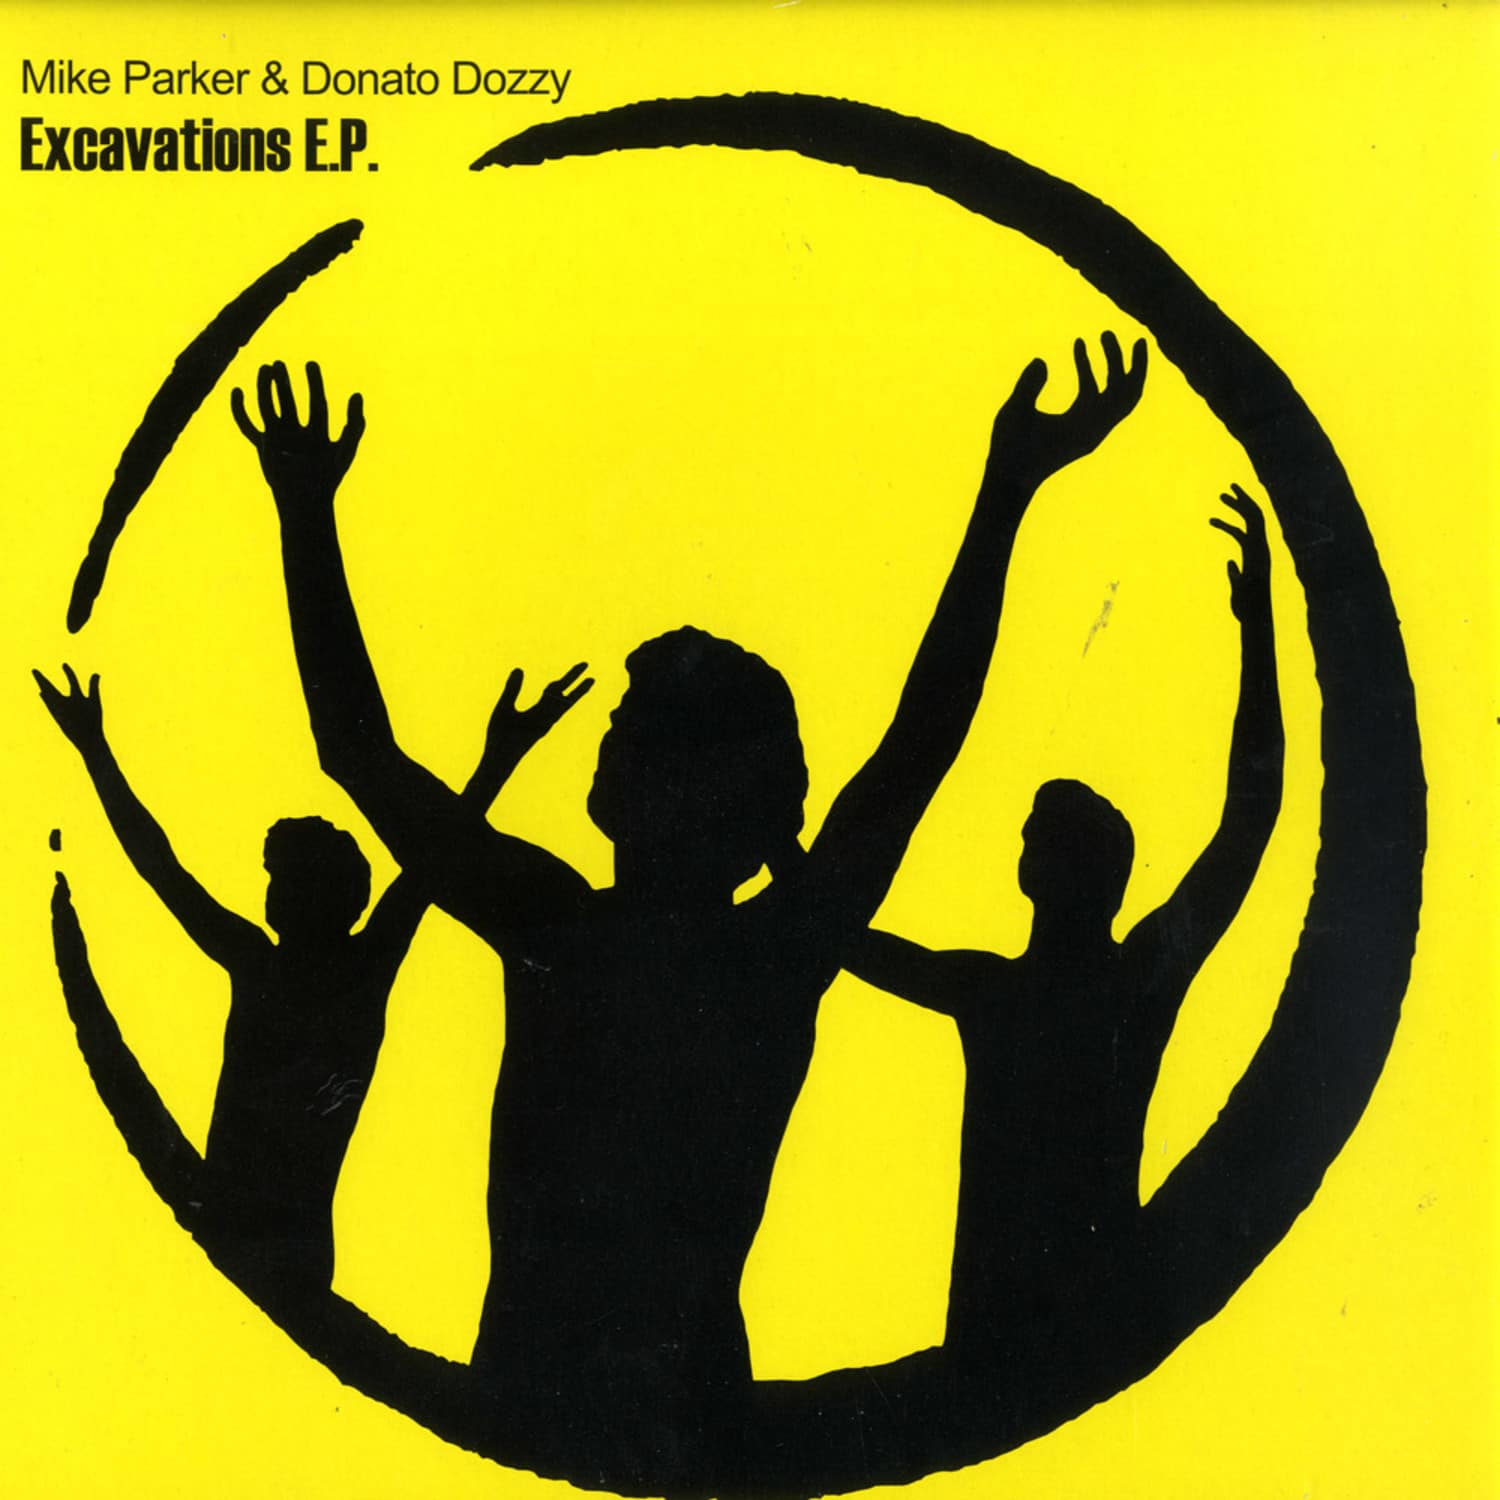 Donato Dozzy & Mike Parker - EXCAVATIONS EP